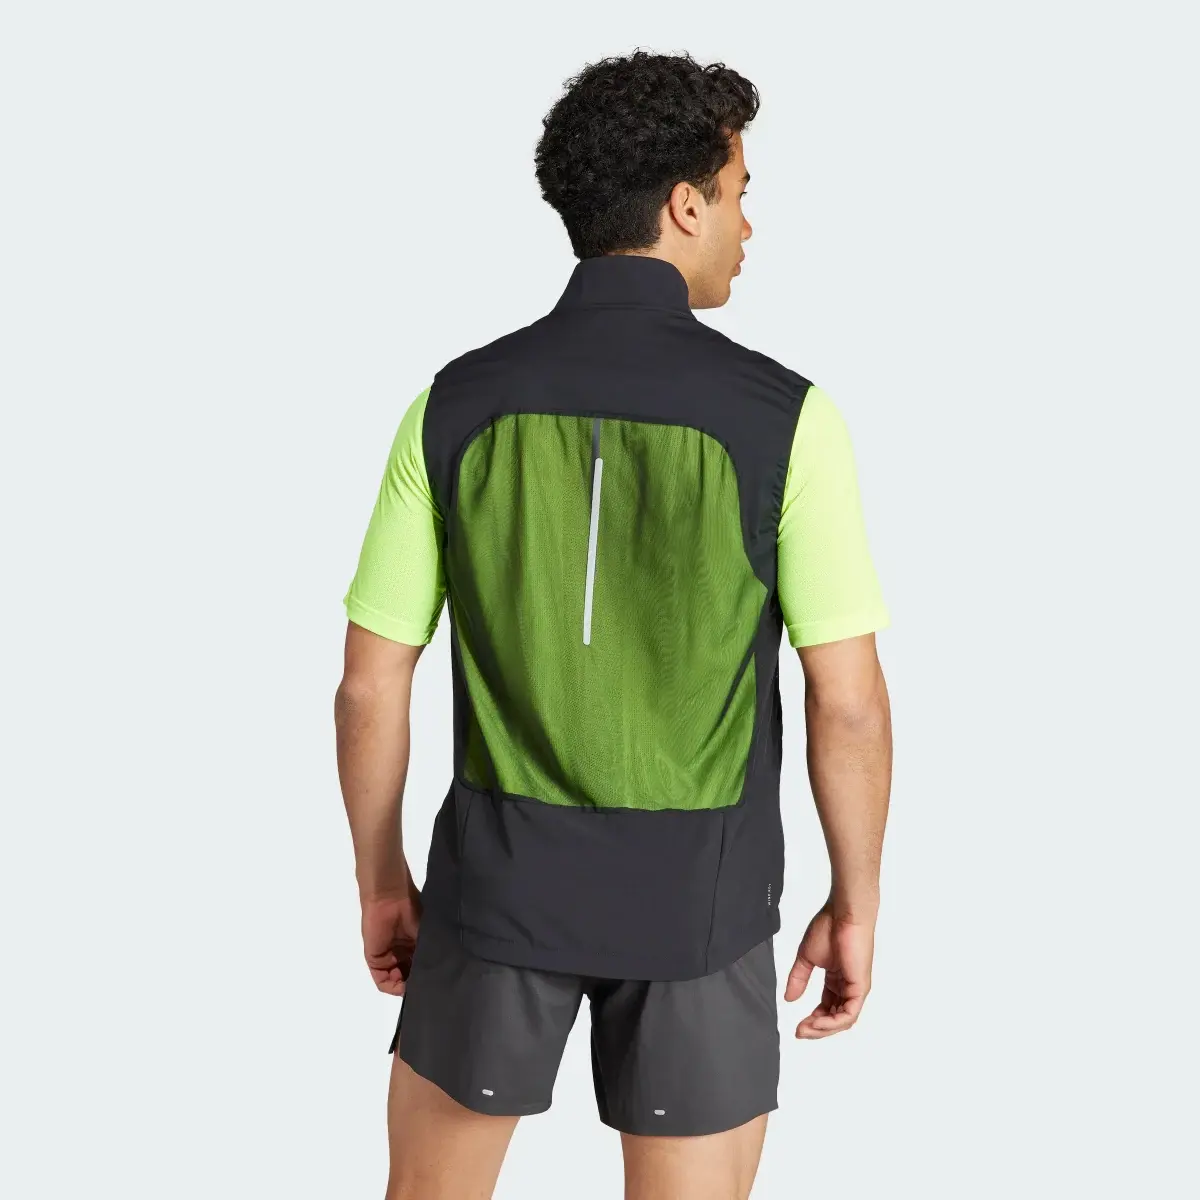 Adidas Ultimate Vest. 3